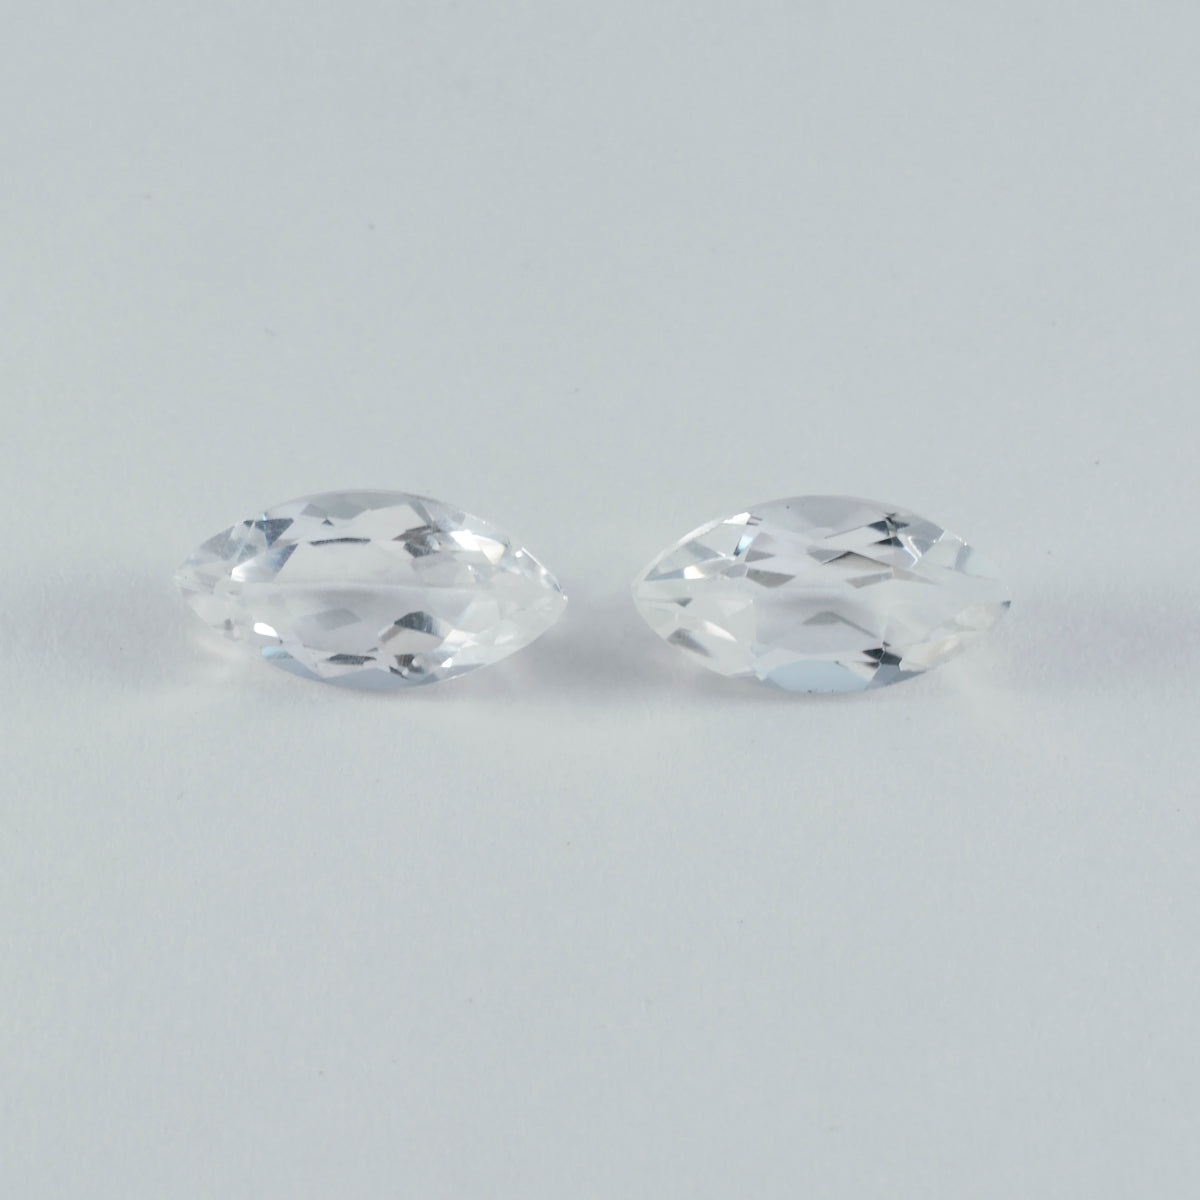 Riyogems 1PC White Crystal Quartz Faceted 10x20 mm Marquise Shape Nice Quality Loose Gems